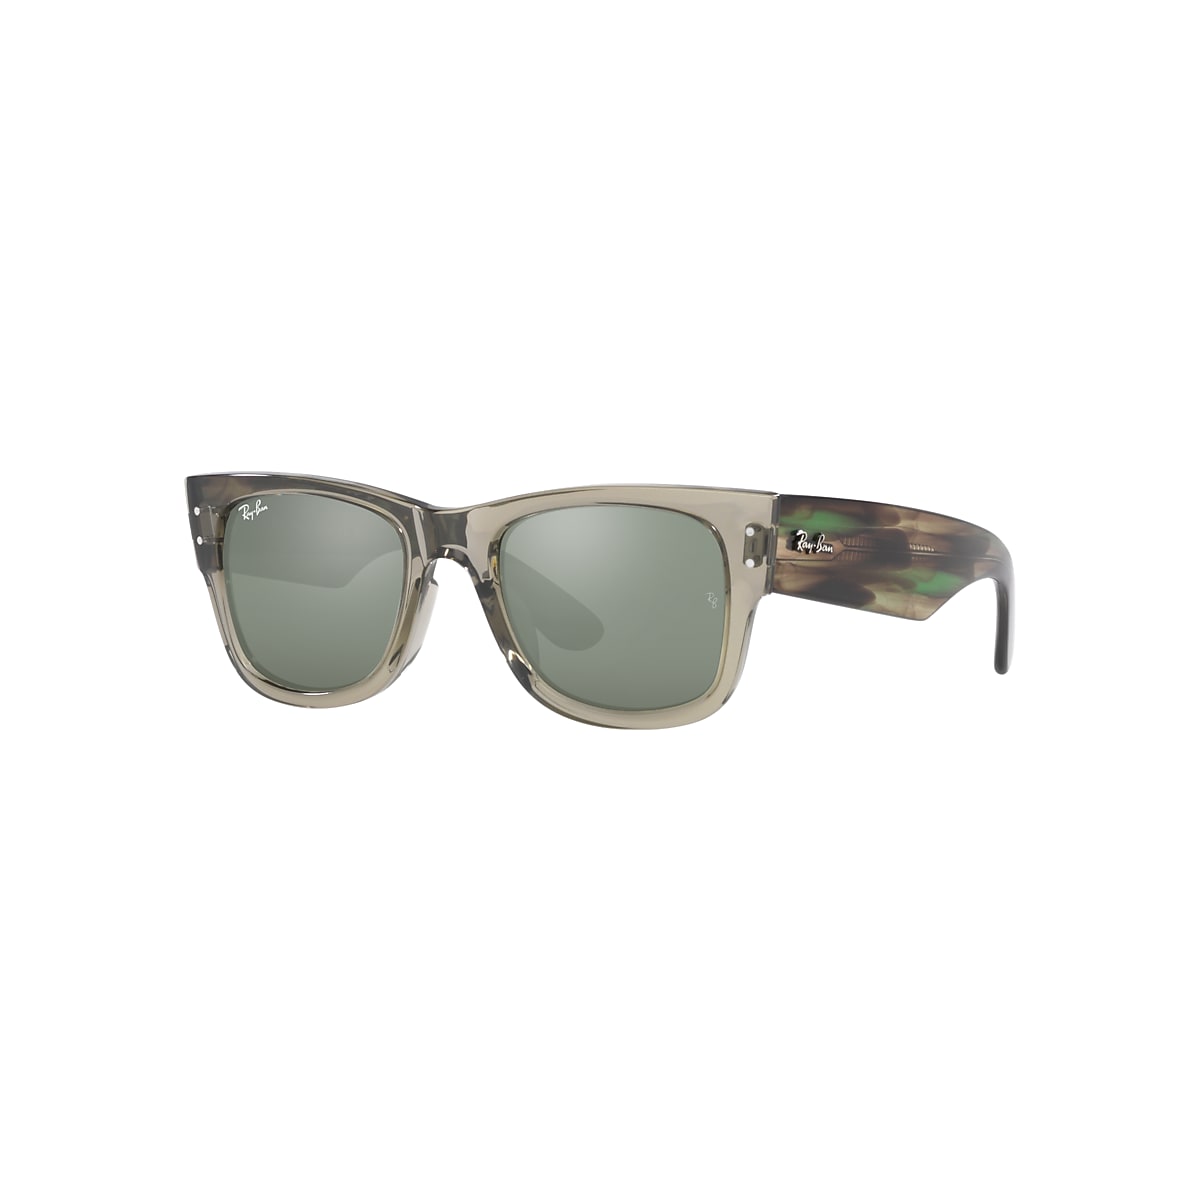 Mega Wayfarer Sunglasses in Transparent Green and Silver | Ray-Ban®